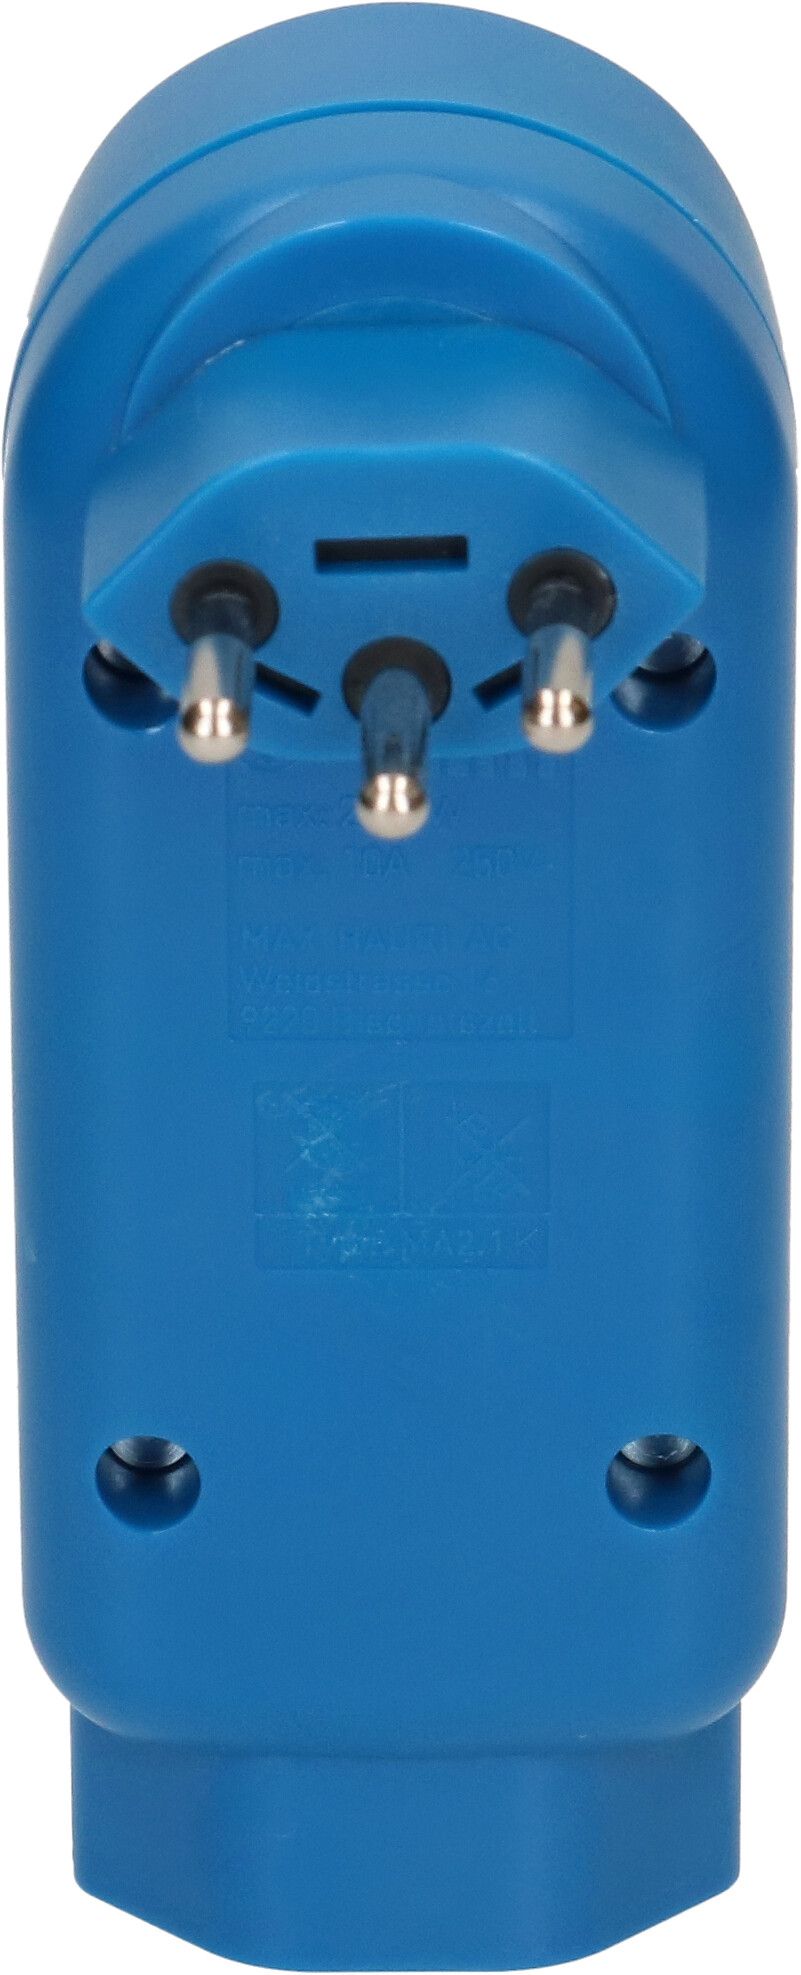 Multi adaptateur maxADAPTturn 2+1x type 13 bleu rotatif BS